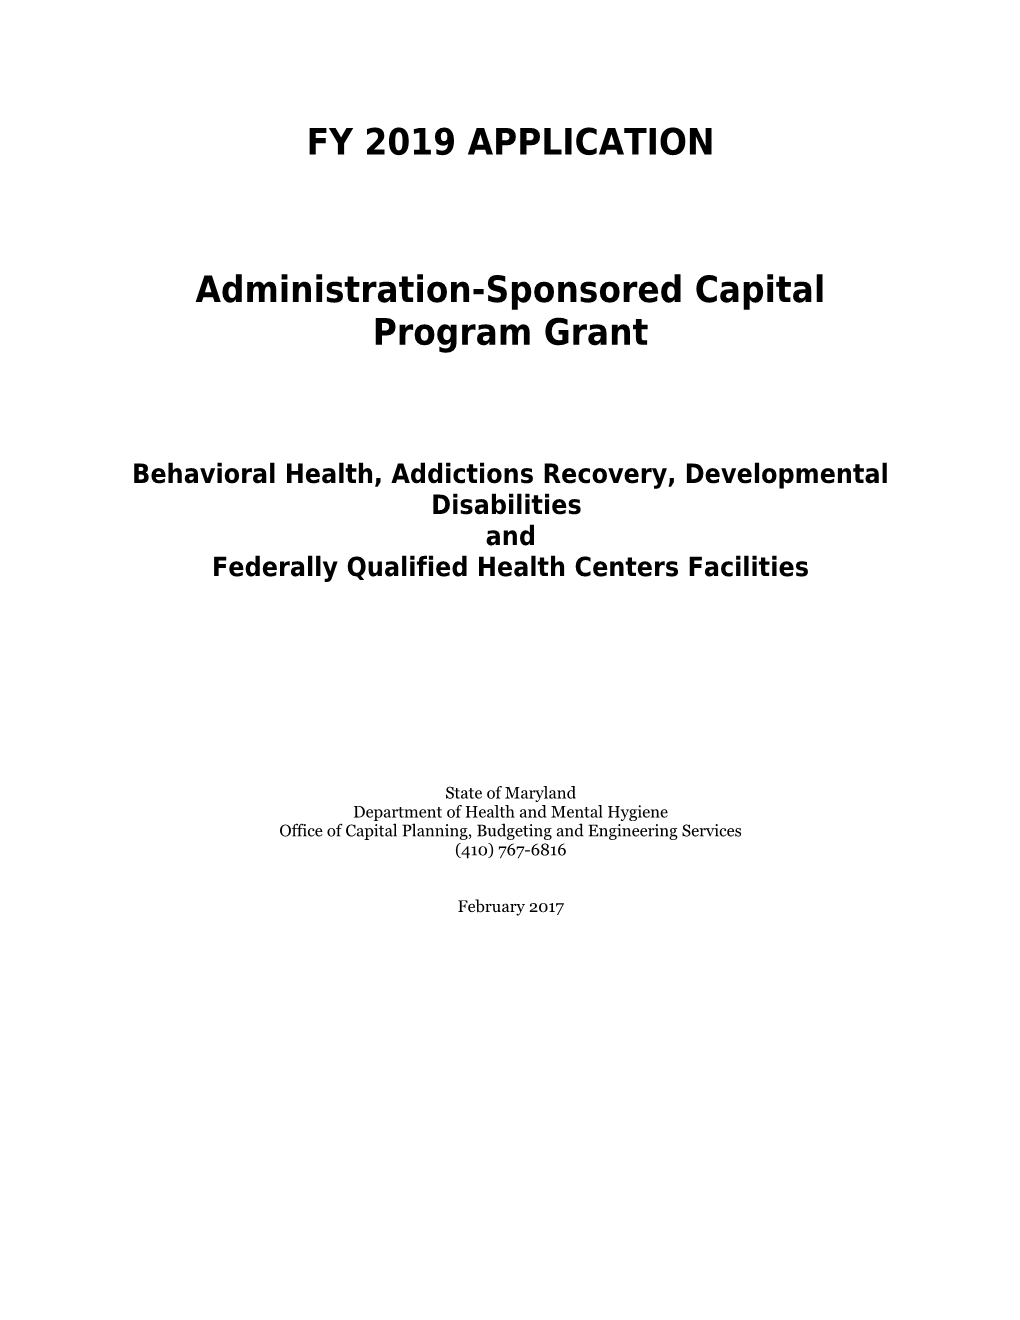 Administration-Sponsored Capital Program Grant s1